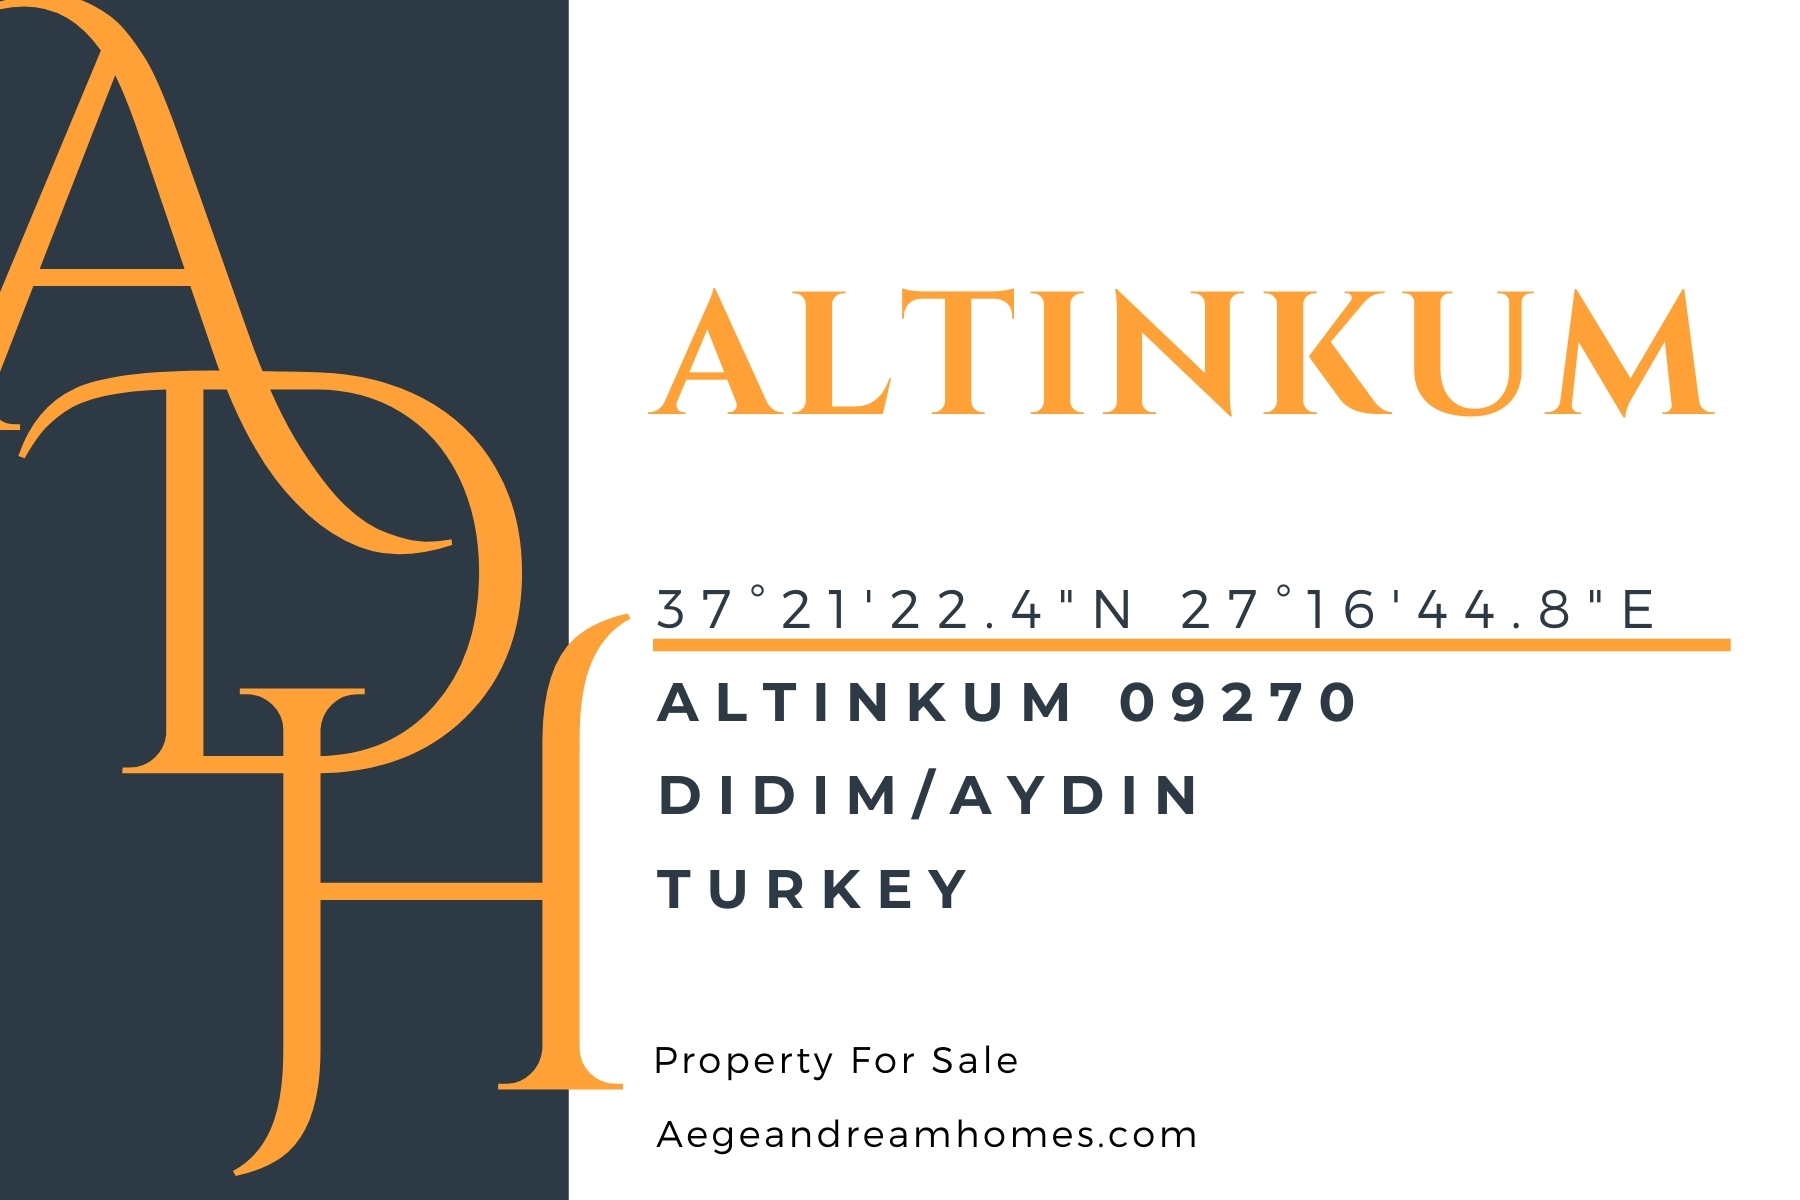 Altinkum postcard. Provides Altinkum address, coordinates and locations. Reads Altinkum property for sale.